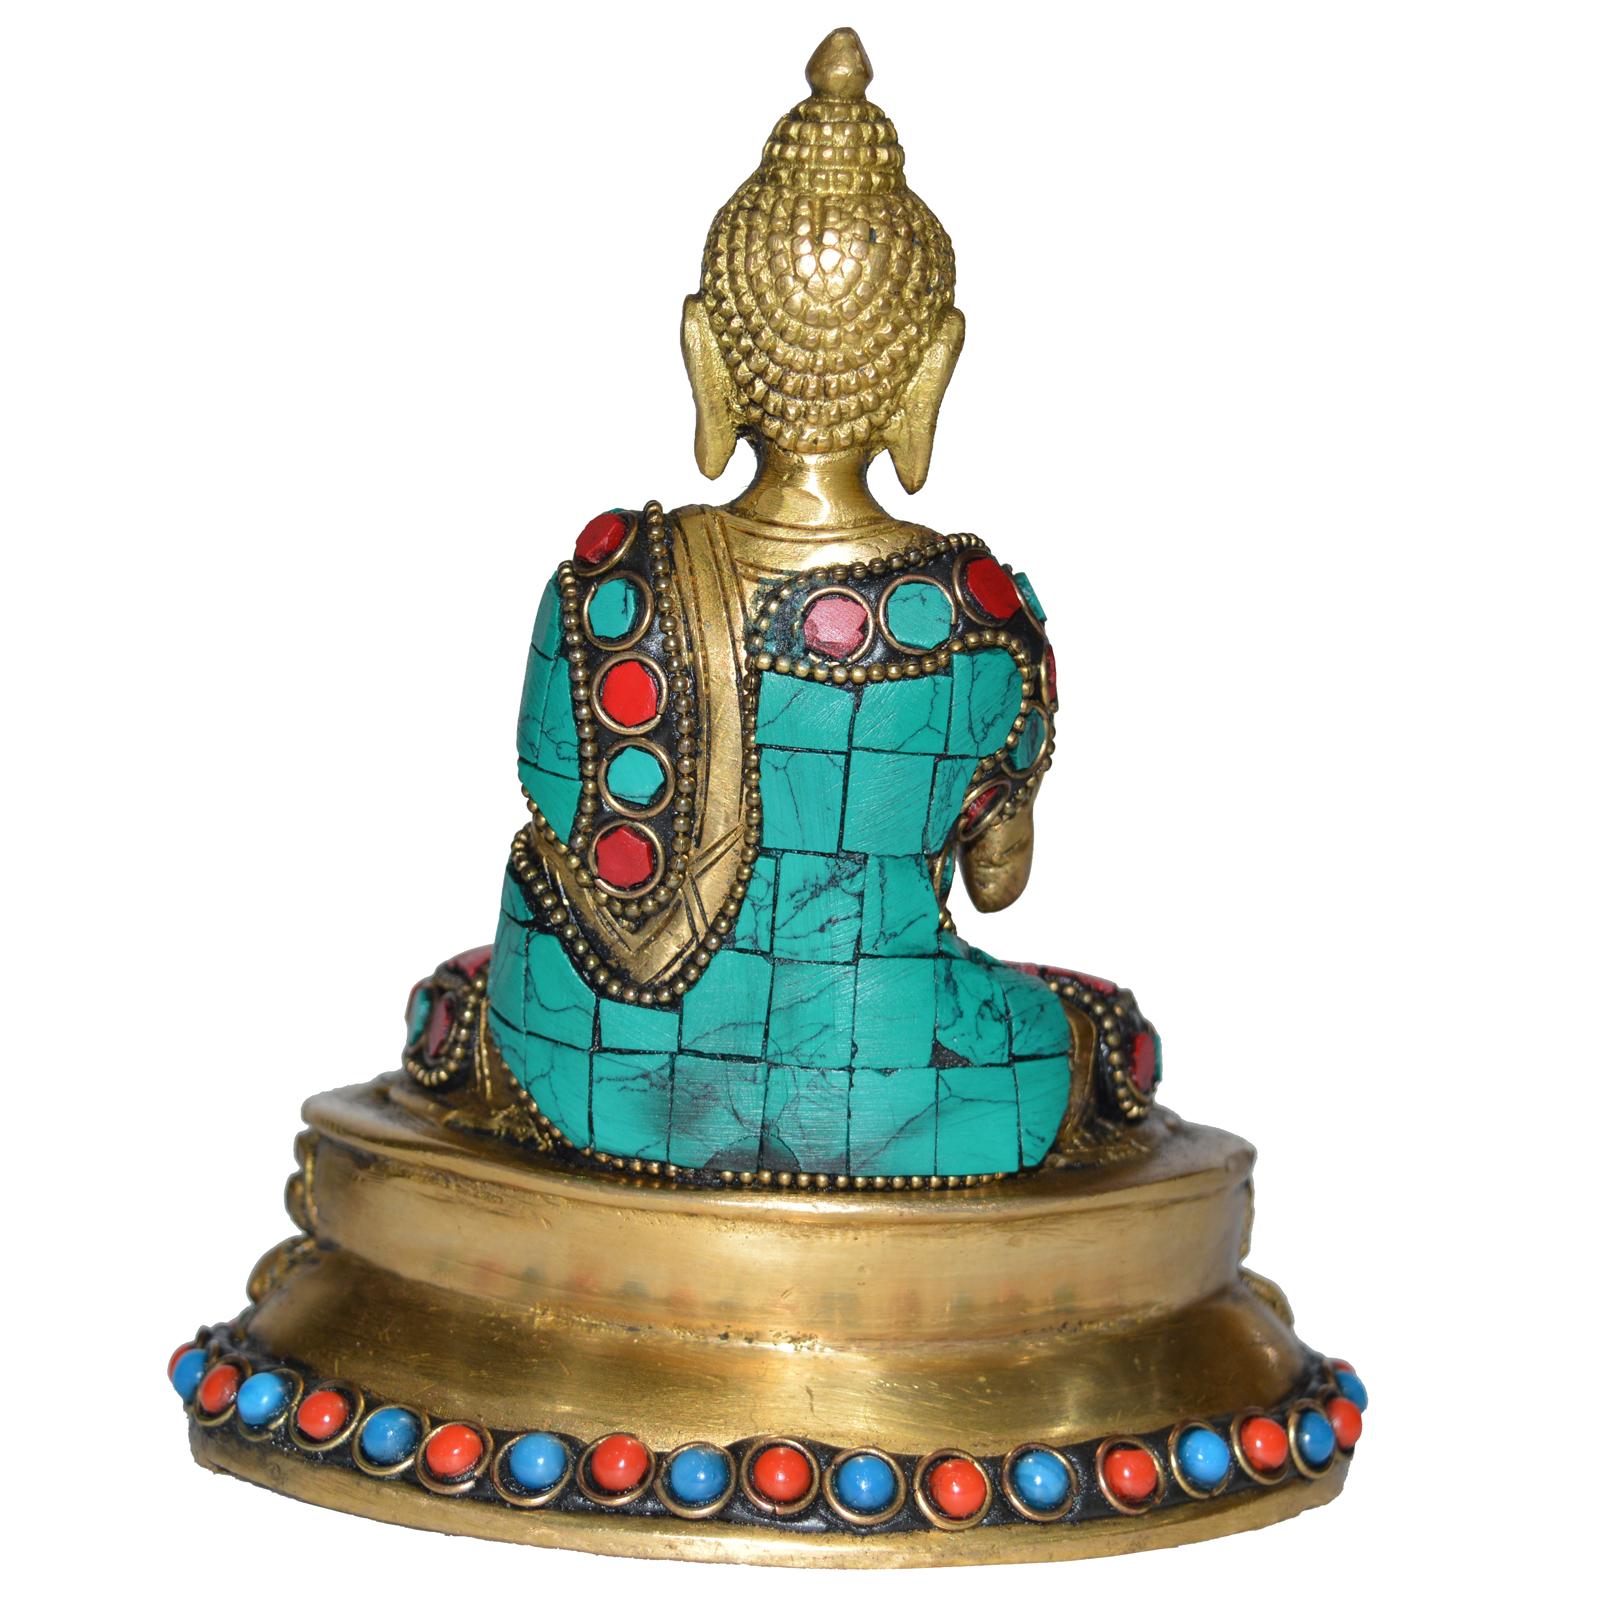 Lord Buddha Sitting on Lotus with turquoise stone work - Buy Buddha Online